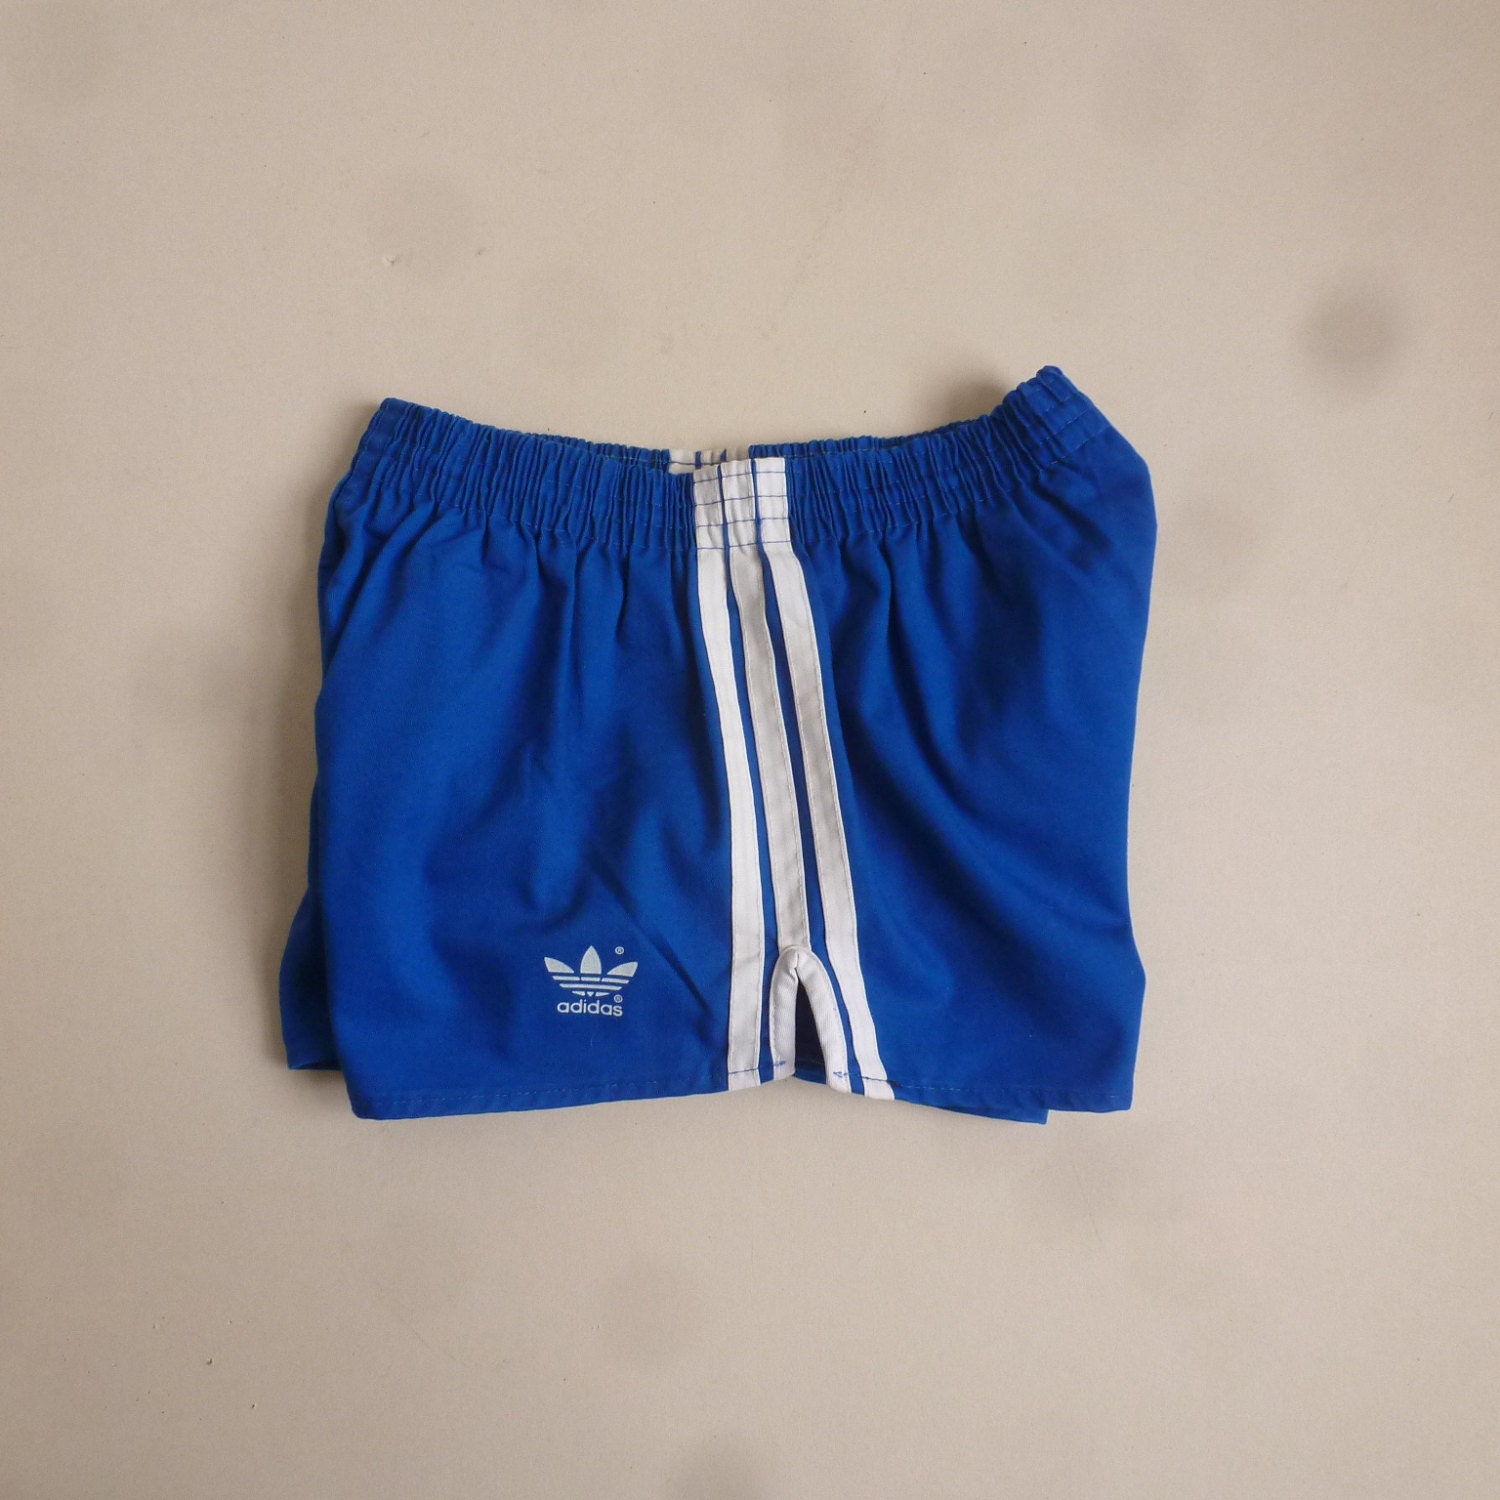 Vintage Adidas Running Shorts 80s Blue Adidas Shorts Three